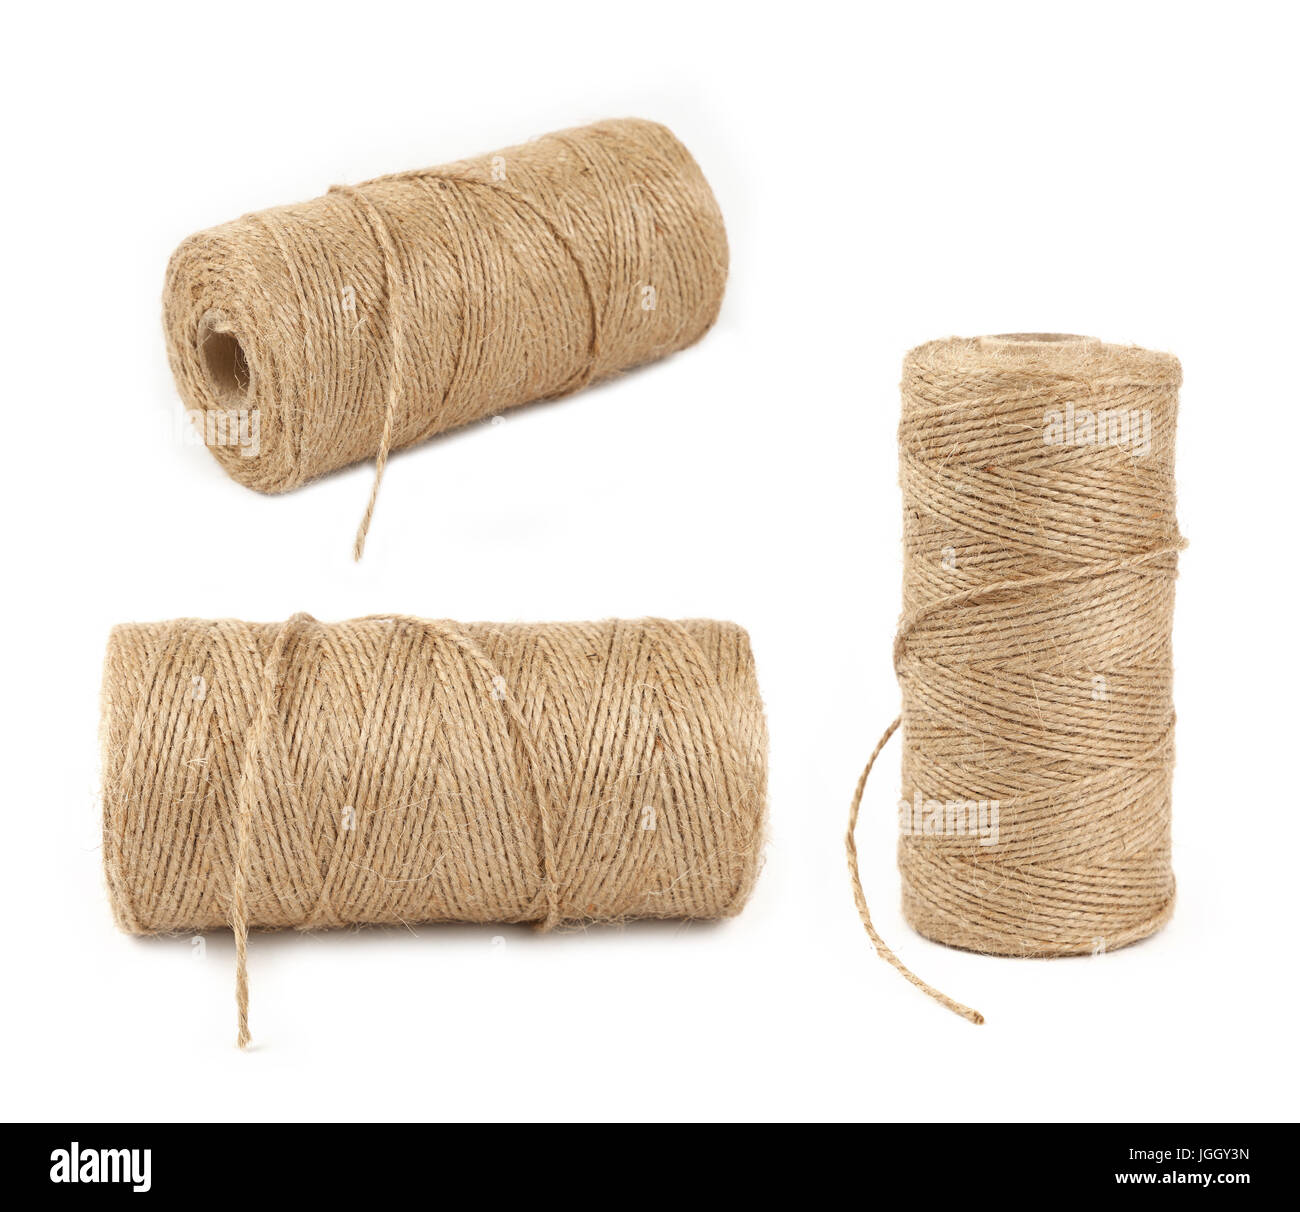 Natural Jute Twine Hemps Rope Cords Carton Gift Wrapping Burlap